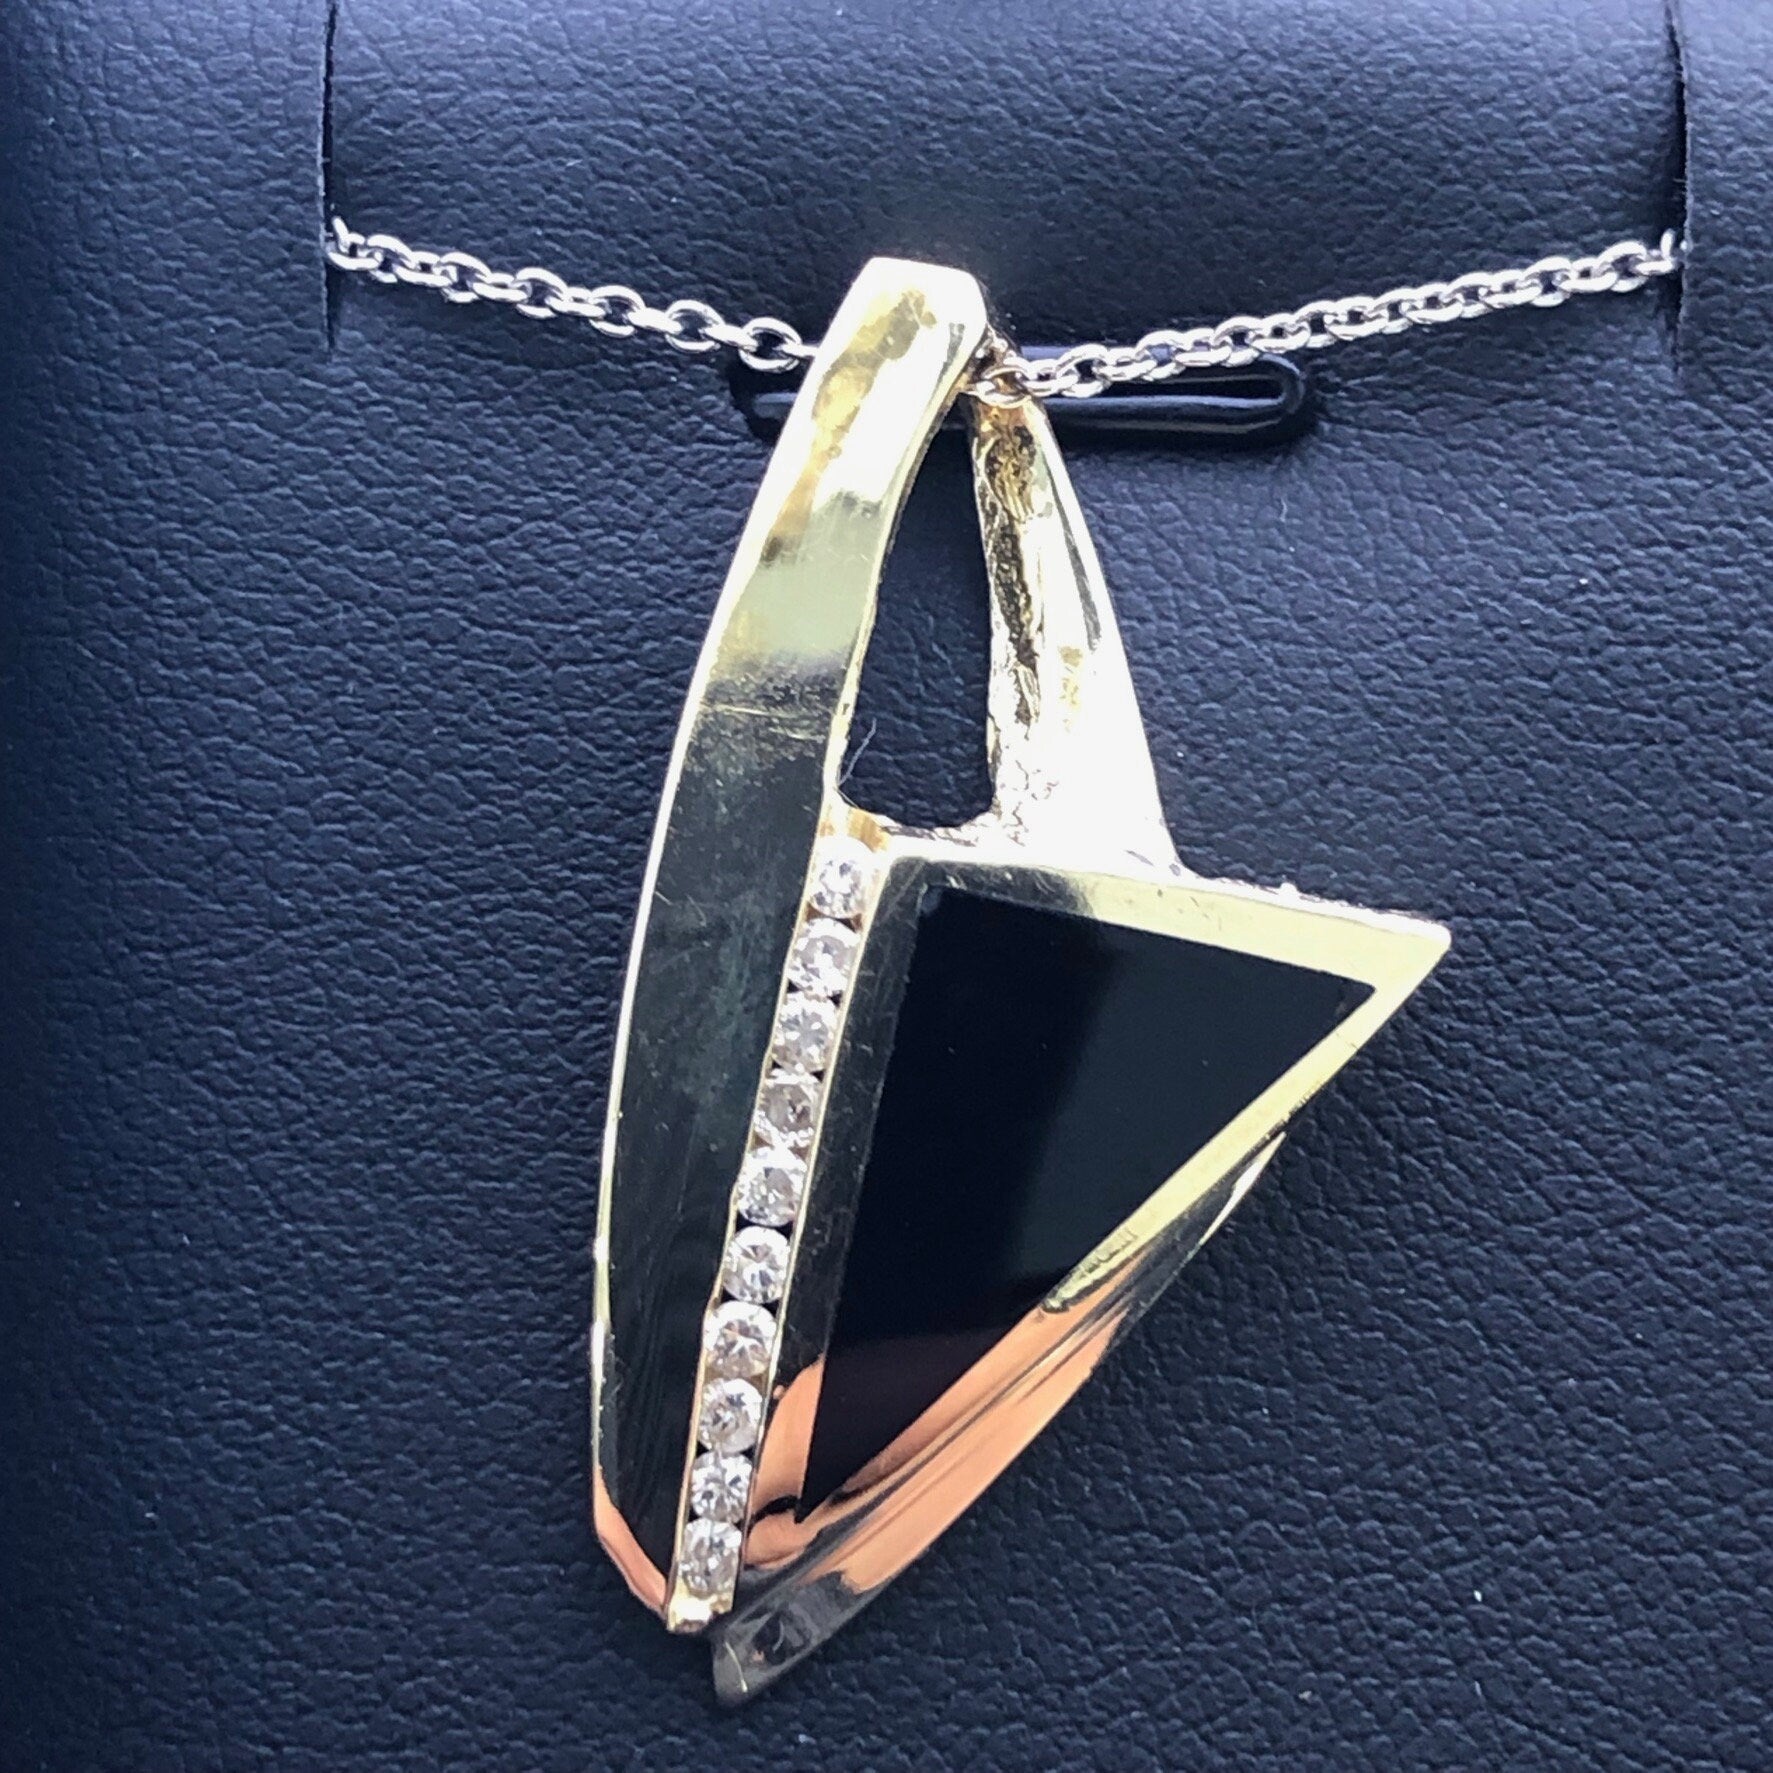 LIV 14k Yellow Gold & Diamonds Abstract Design Black Onyx Halo Pendant Necklace Gift